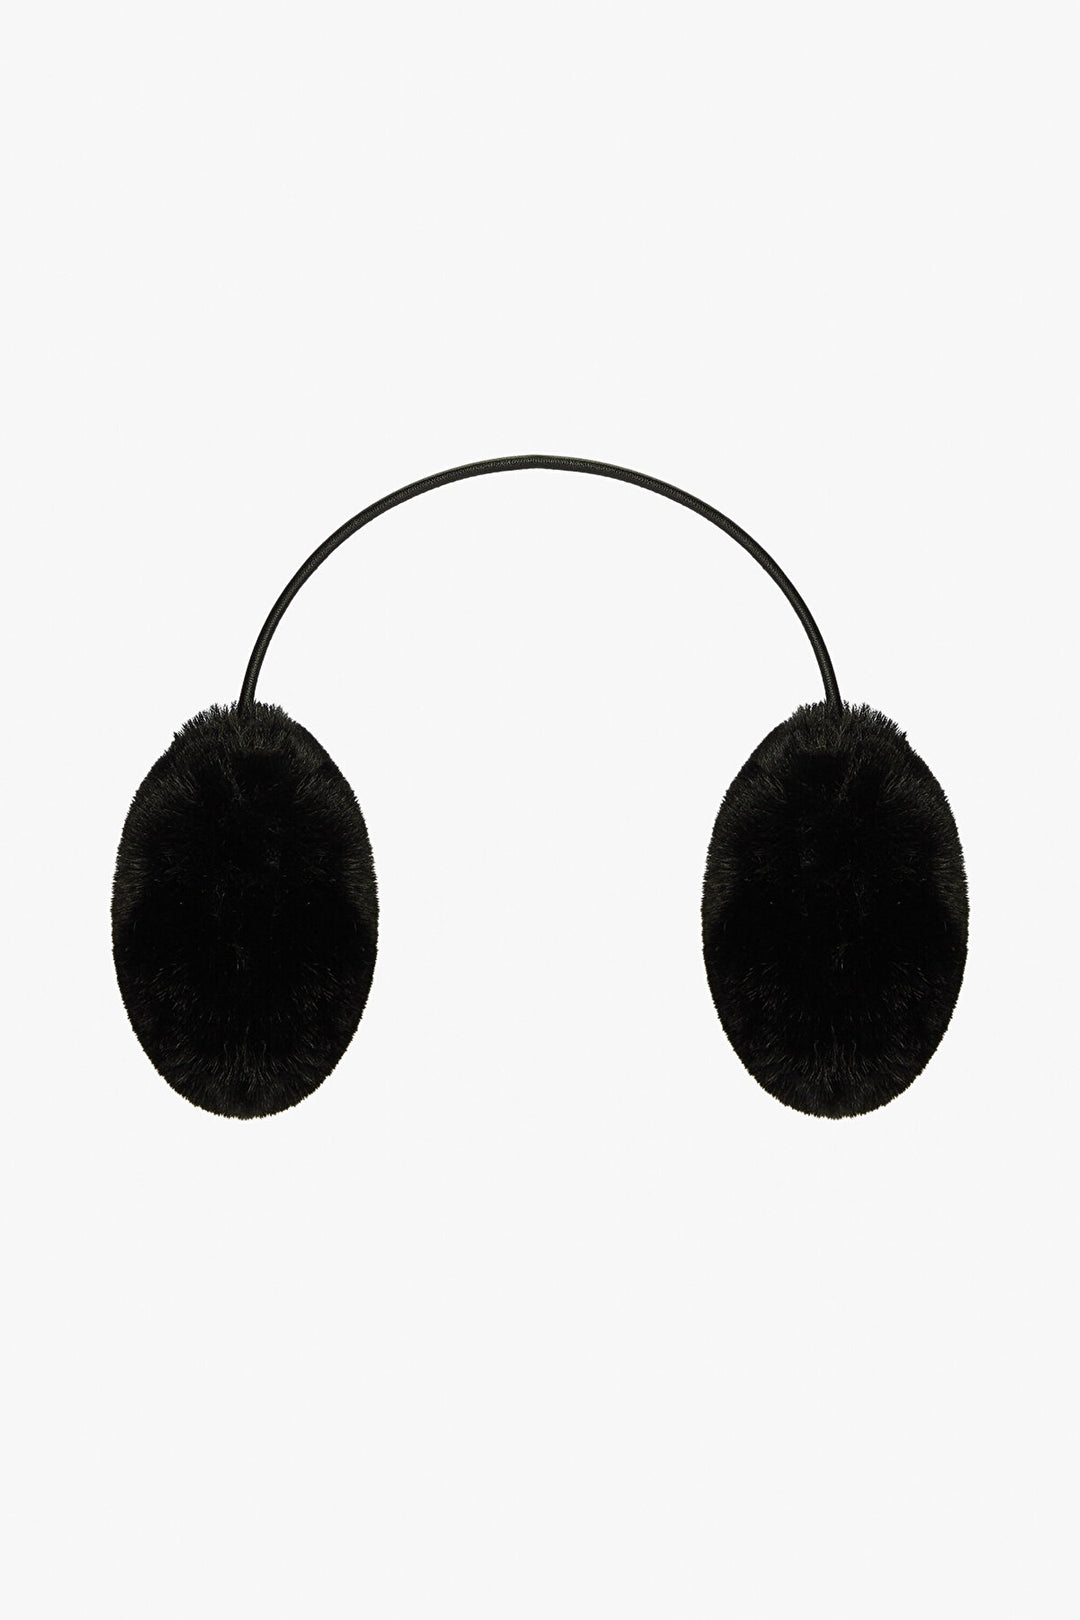 Candy Black Headphones